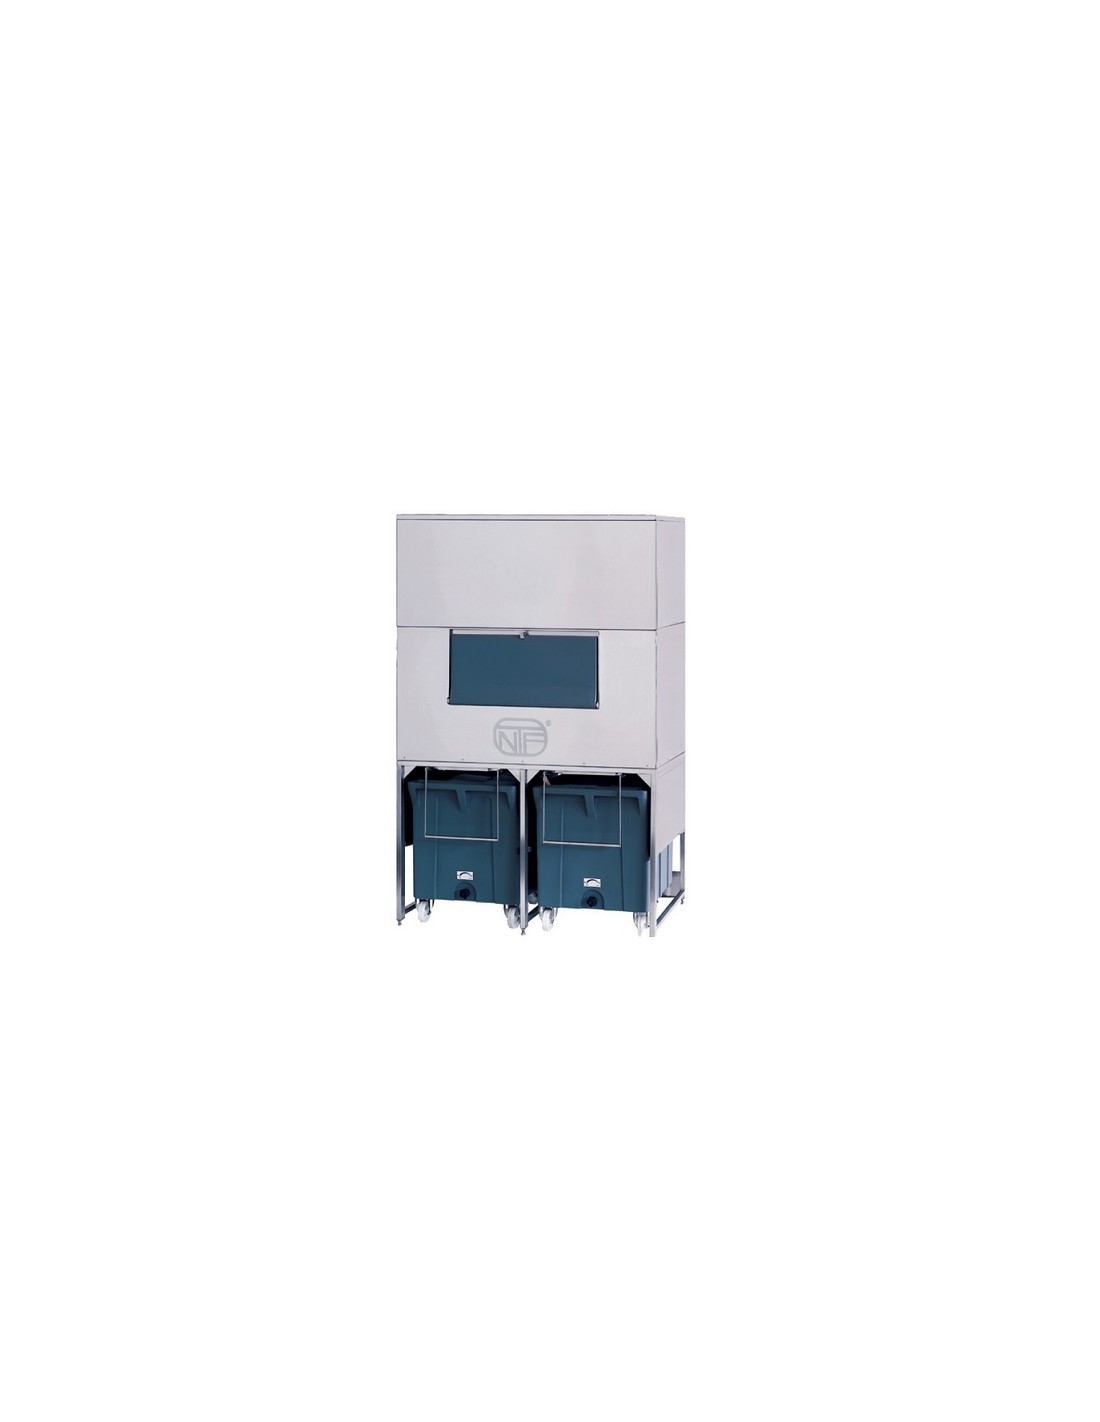 Contenedor de hielo - Capacidad de contenedores kg 108 x 2 - Reserva kg 1000 - cm 156 x 133 x 246 h